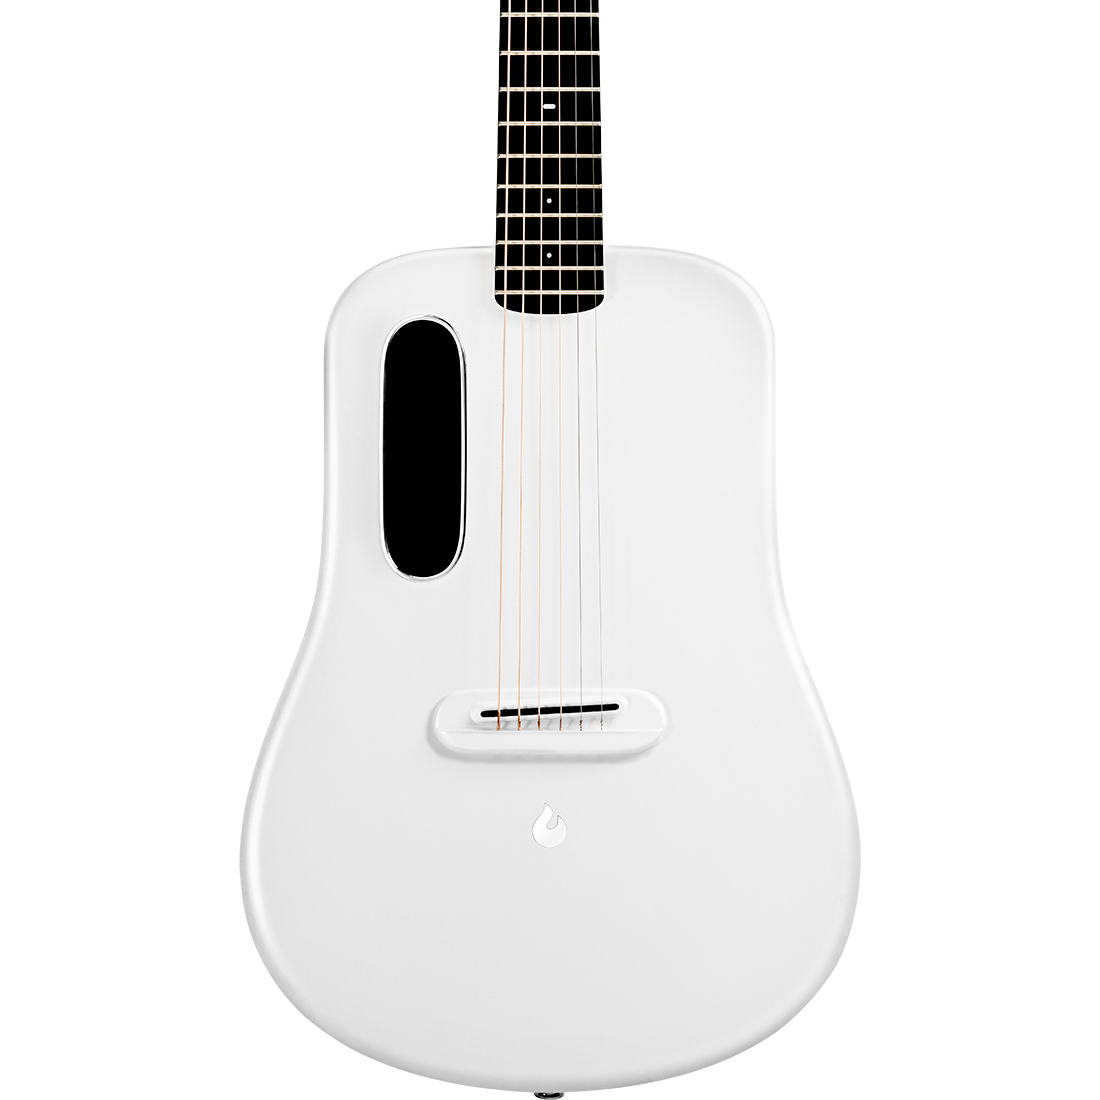 Lava Music Lava ME 3 36” Smart Guitar in White w/ Ideal Bag